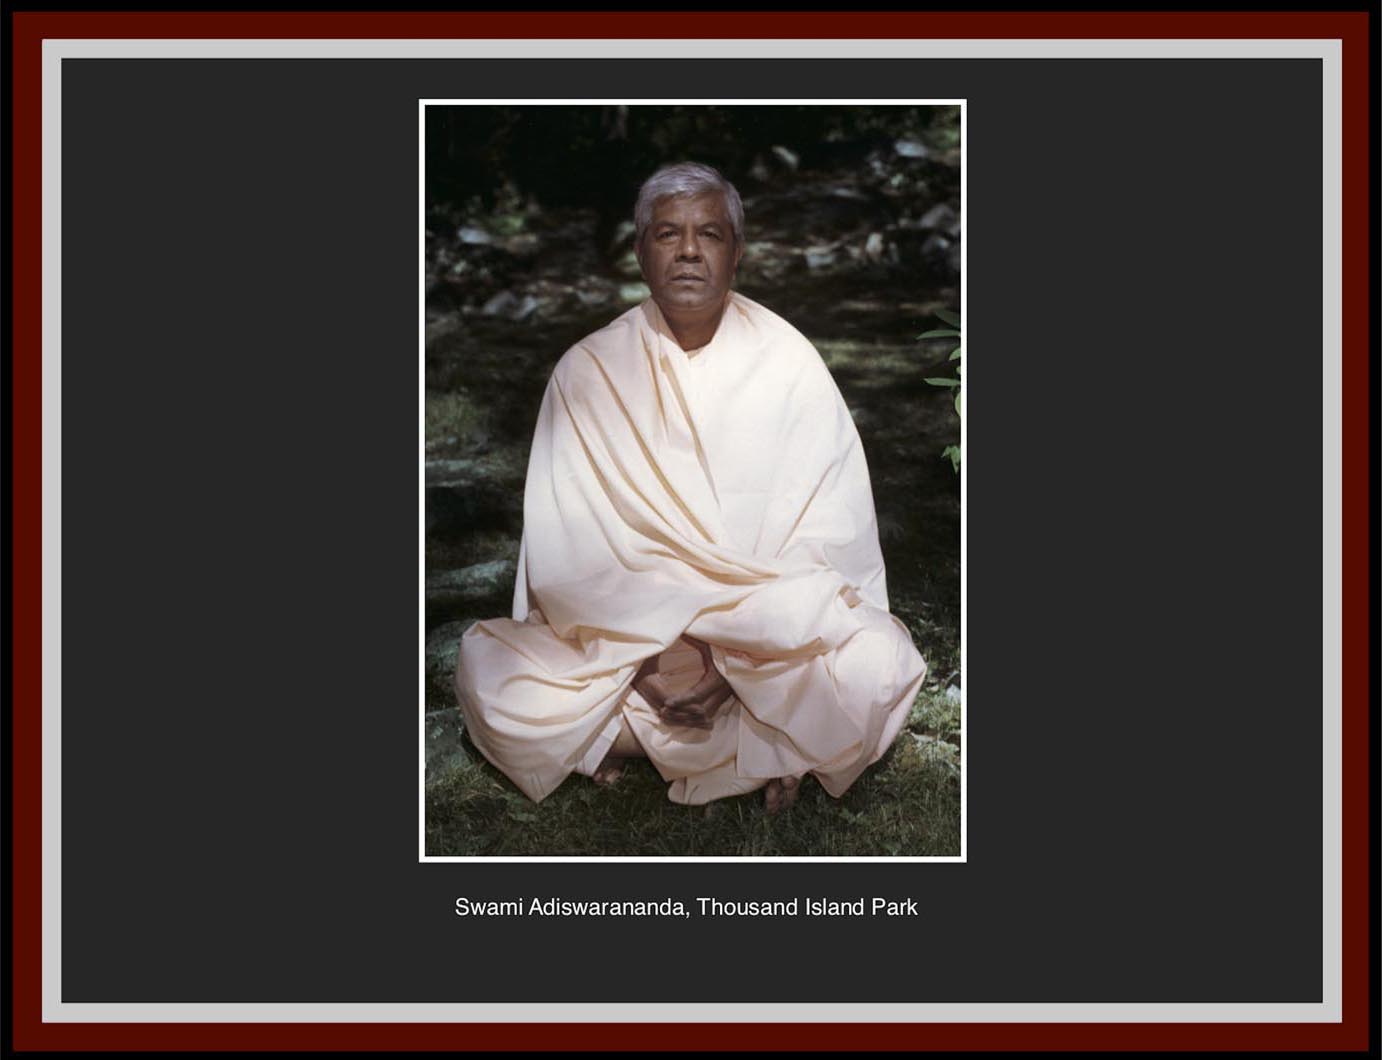 Swami Adiswarananda seated at Thousand Island Park.